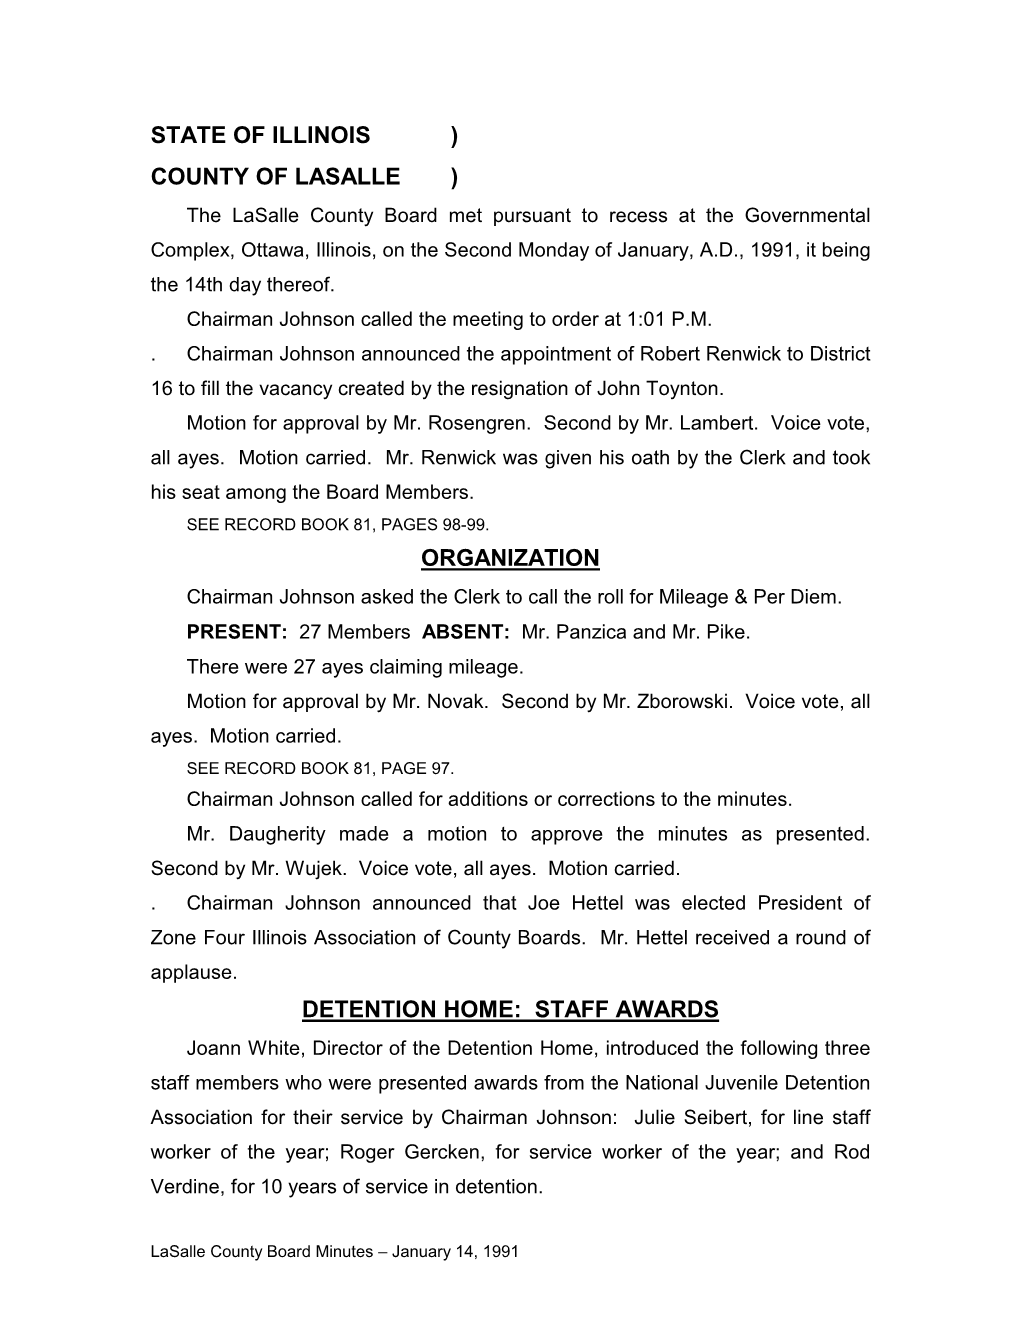 Lasalle County Board Minutes